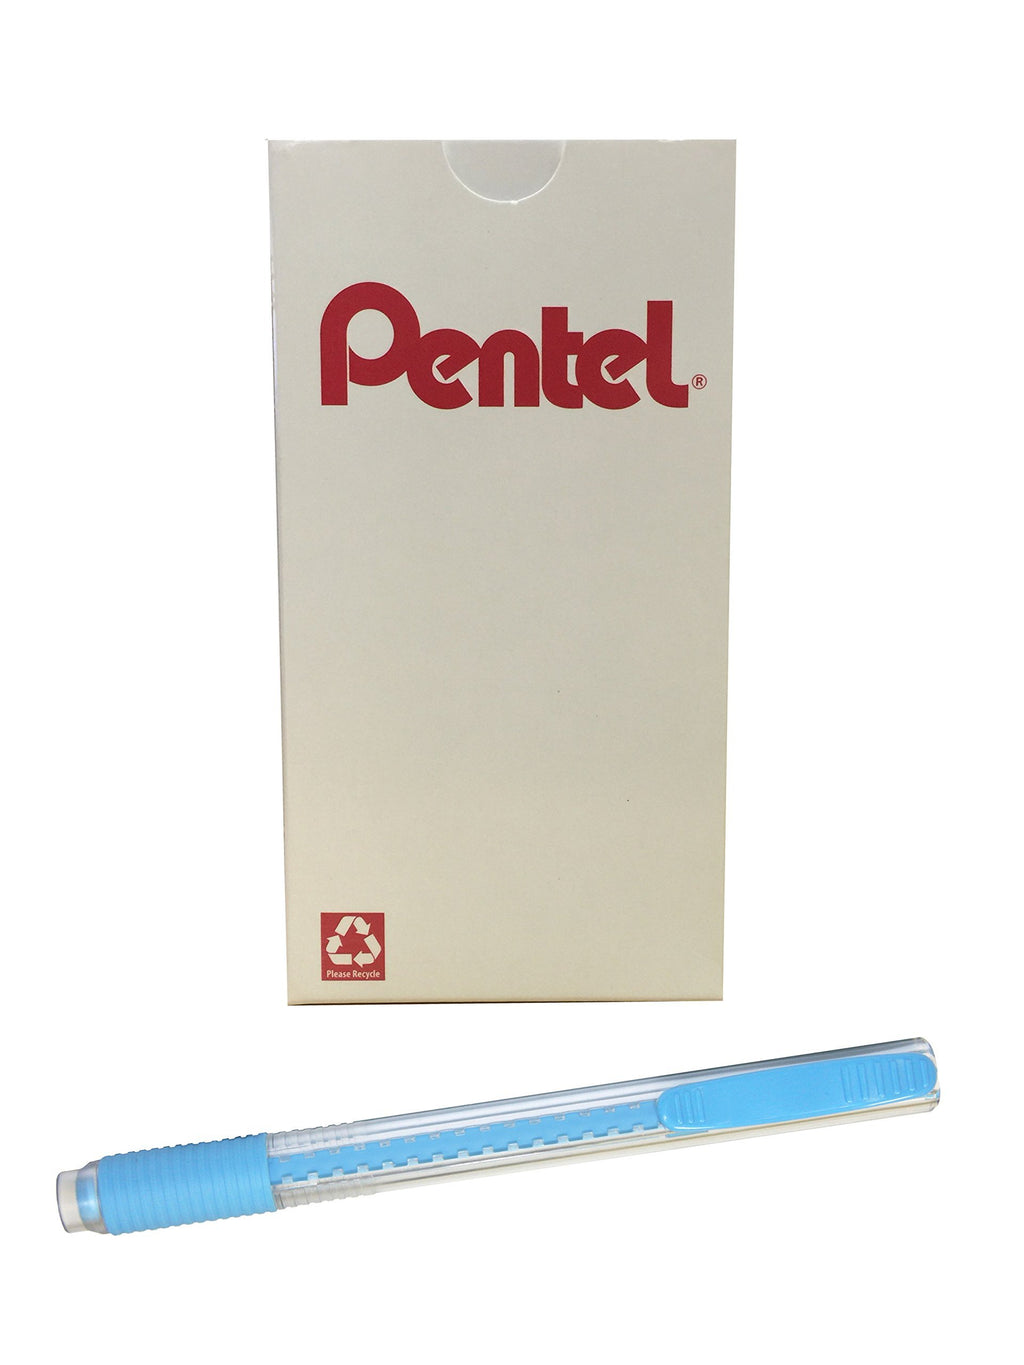 Pentel Clic Colors Retractable Eraser with Grip, Sky Blue Barrel, Box of 12 (ZE23S)